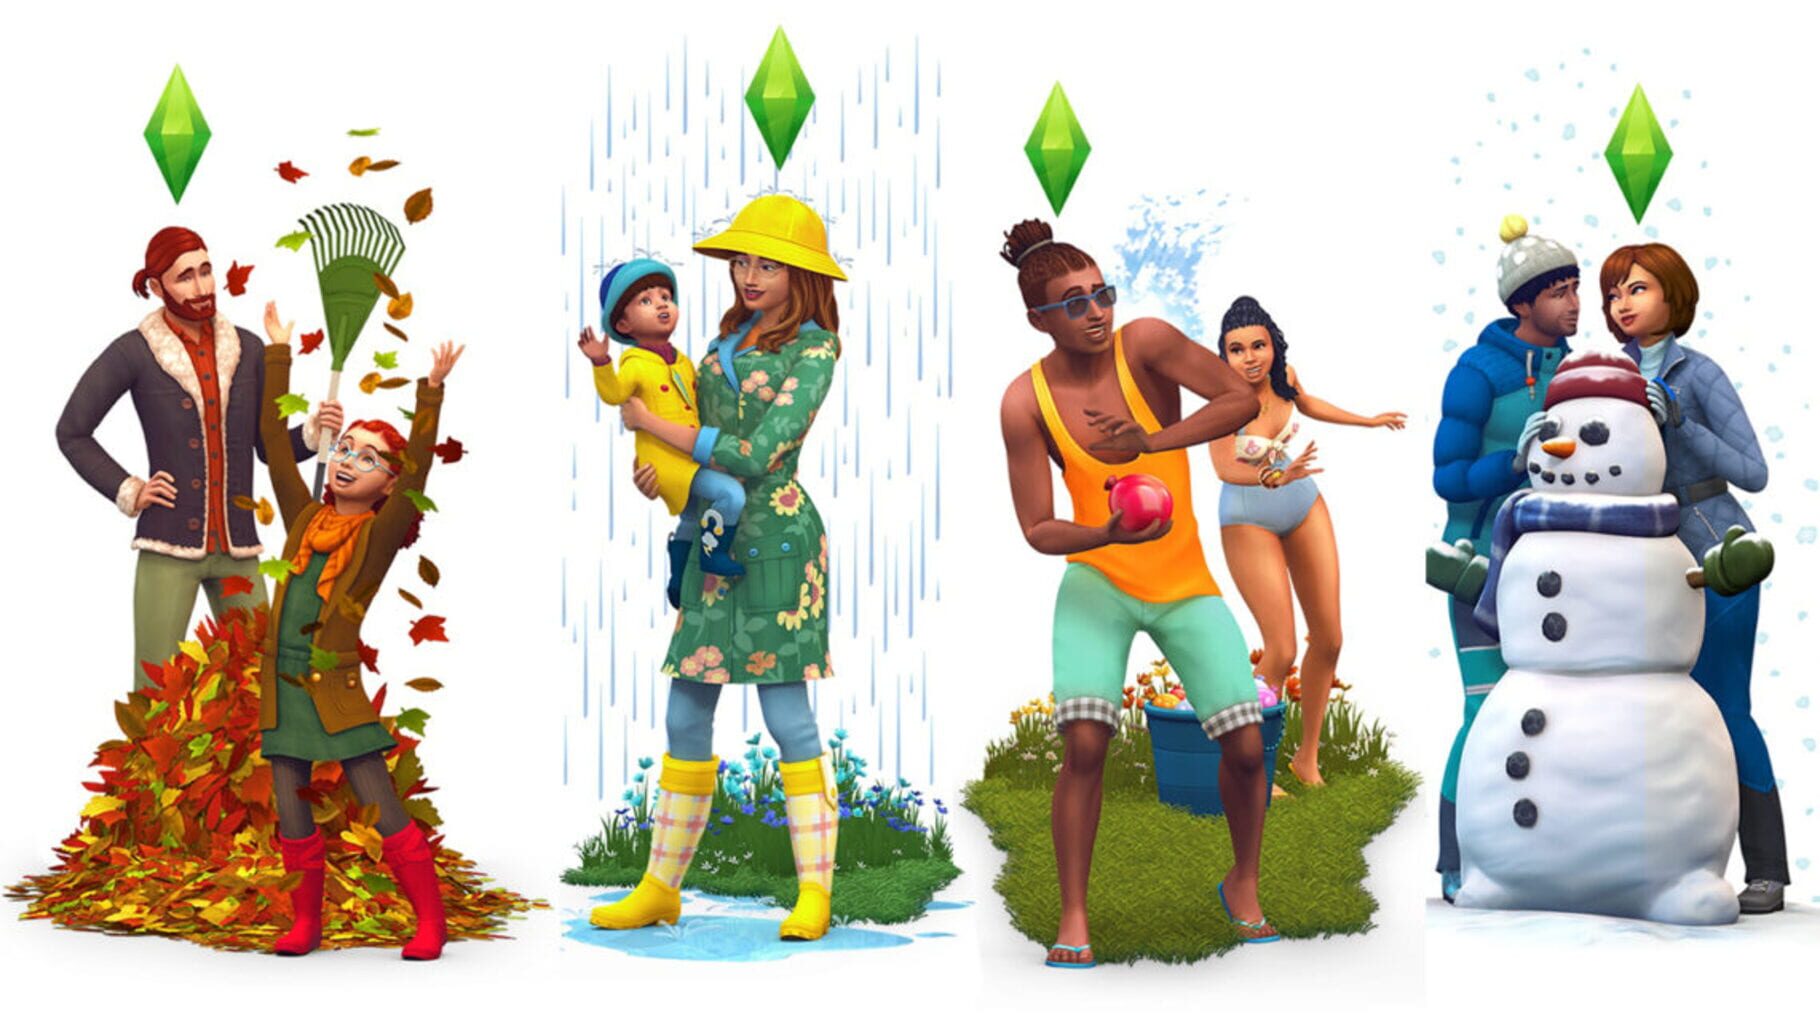 Arte - The Sims 4: Seasons